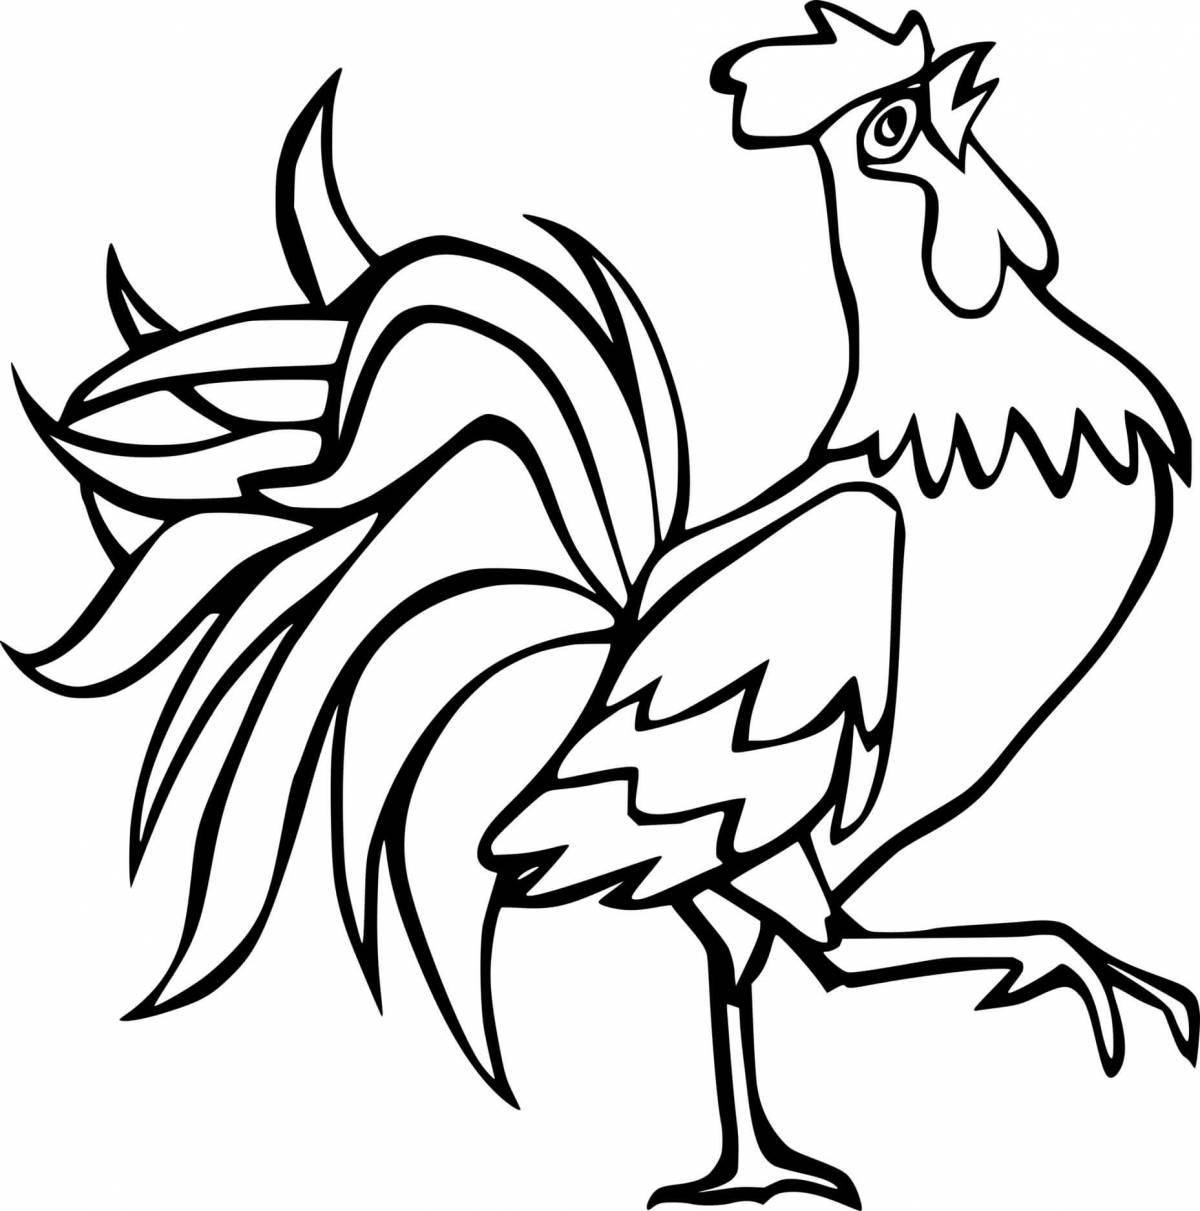 Amazing cockerel drawing